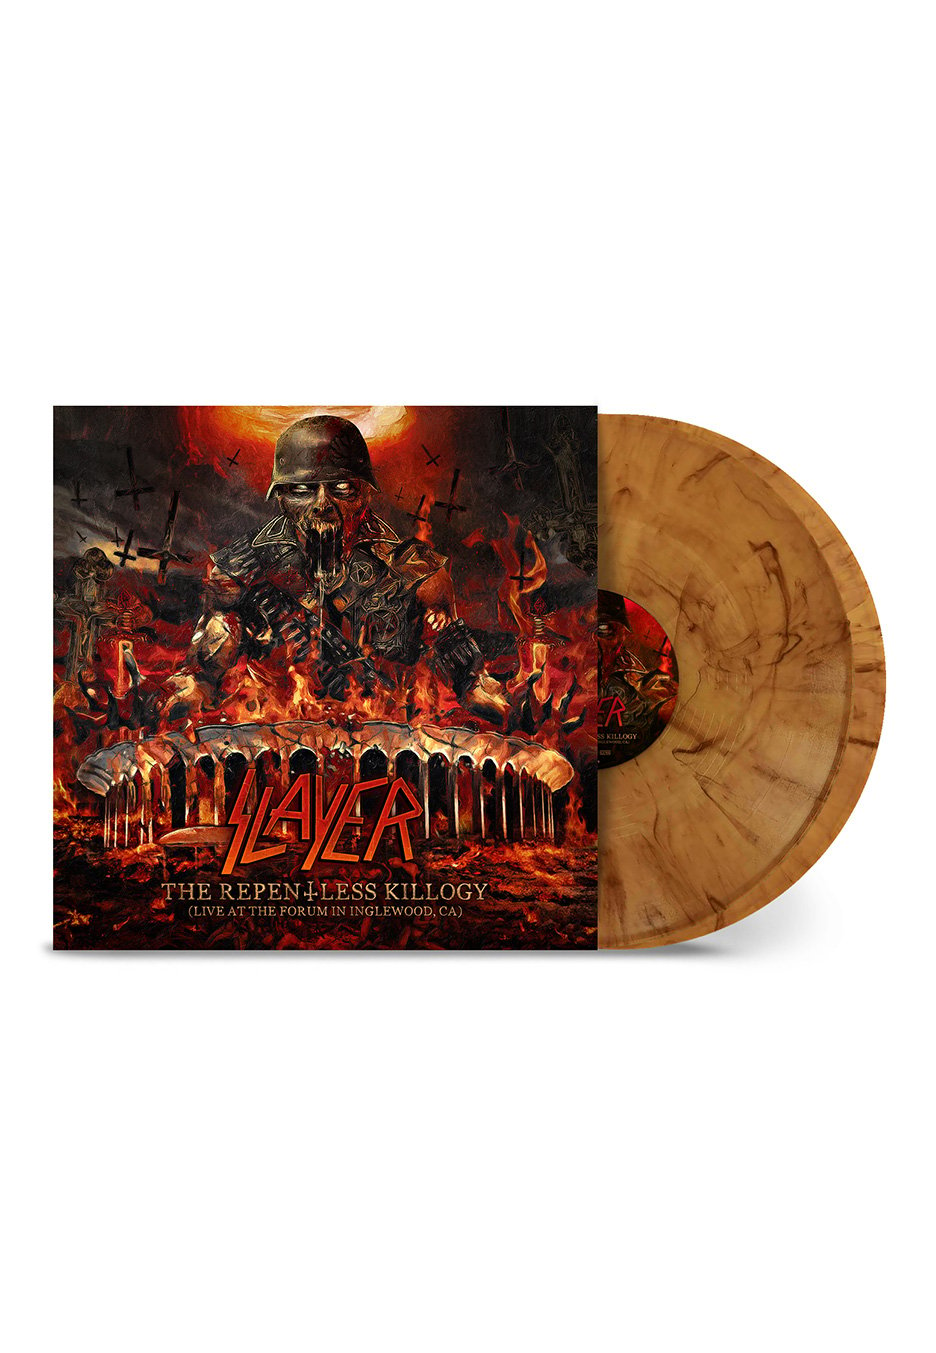 Slayer - The Repentless Killogy Ltd. Amber Smoke - Colored 2 Vinyl